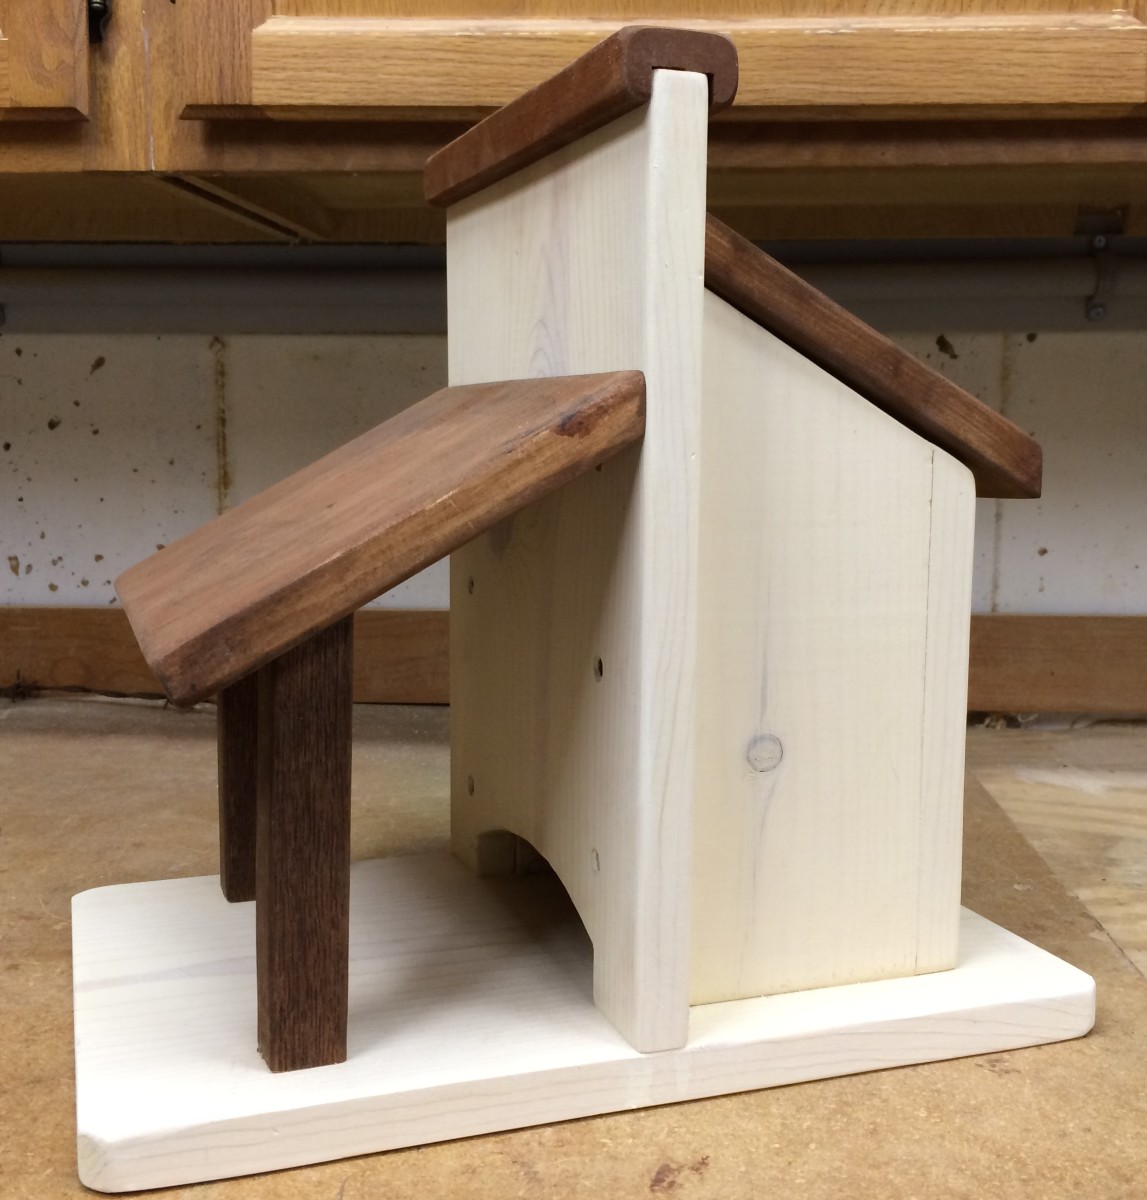 DIY Platform Bird Feeder Plans: How to Build a Rustic ...